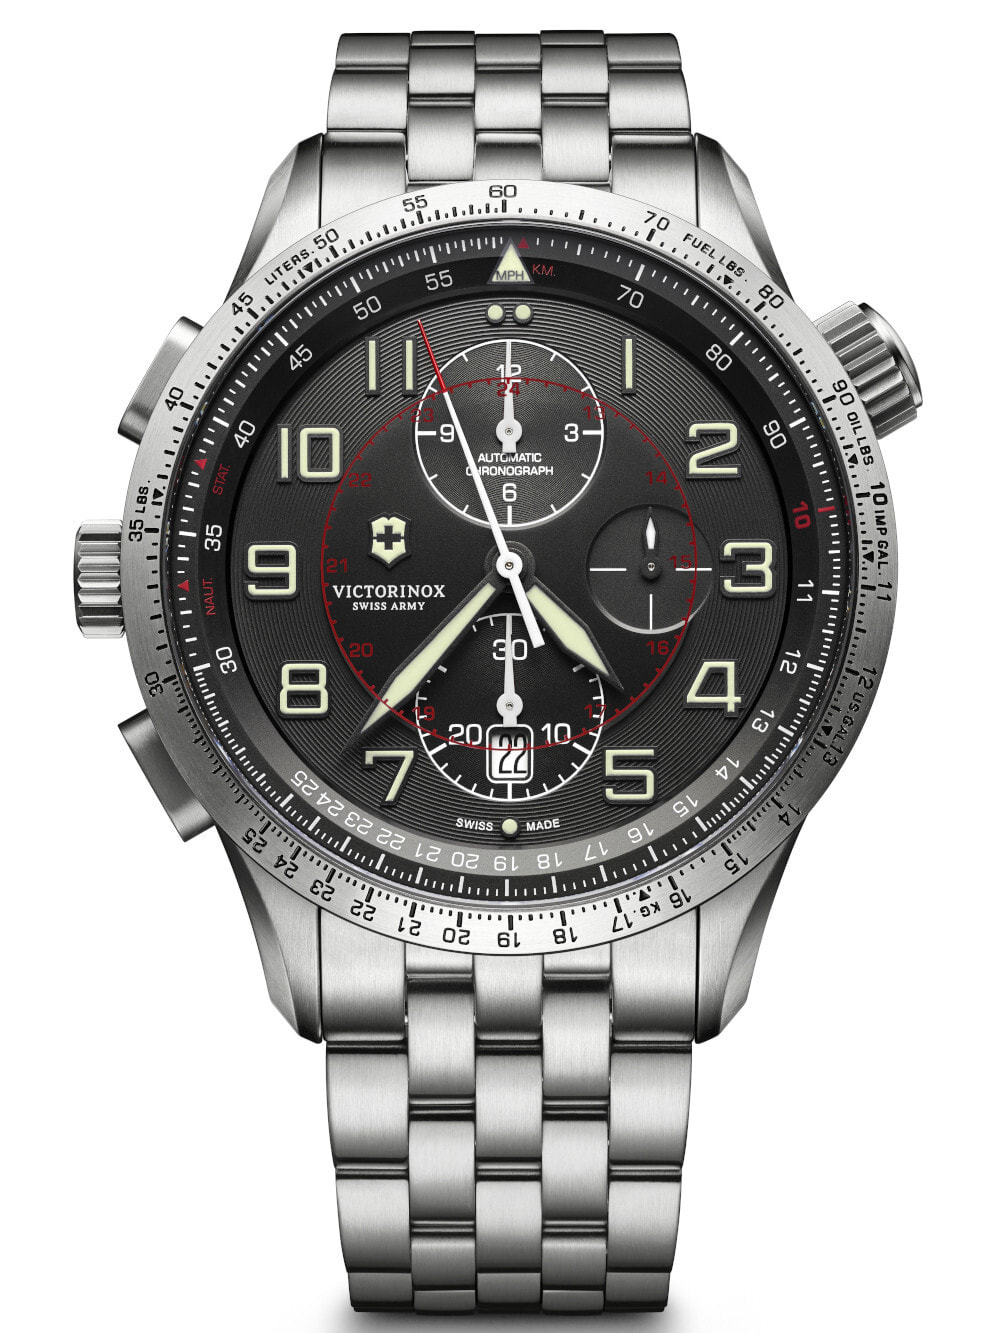 Мужские наручные часы с серебристым браслетом Victorinox 241722 Airboss Mach 9 Chronograph 45mm 10ATM